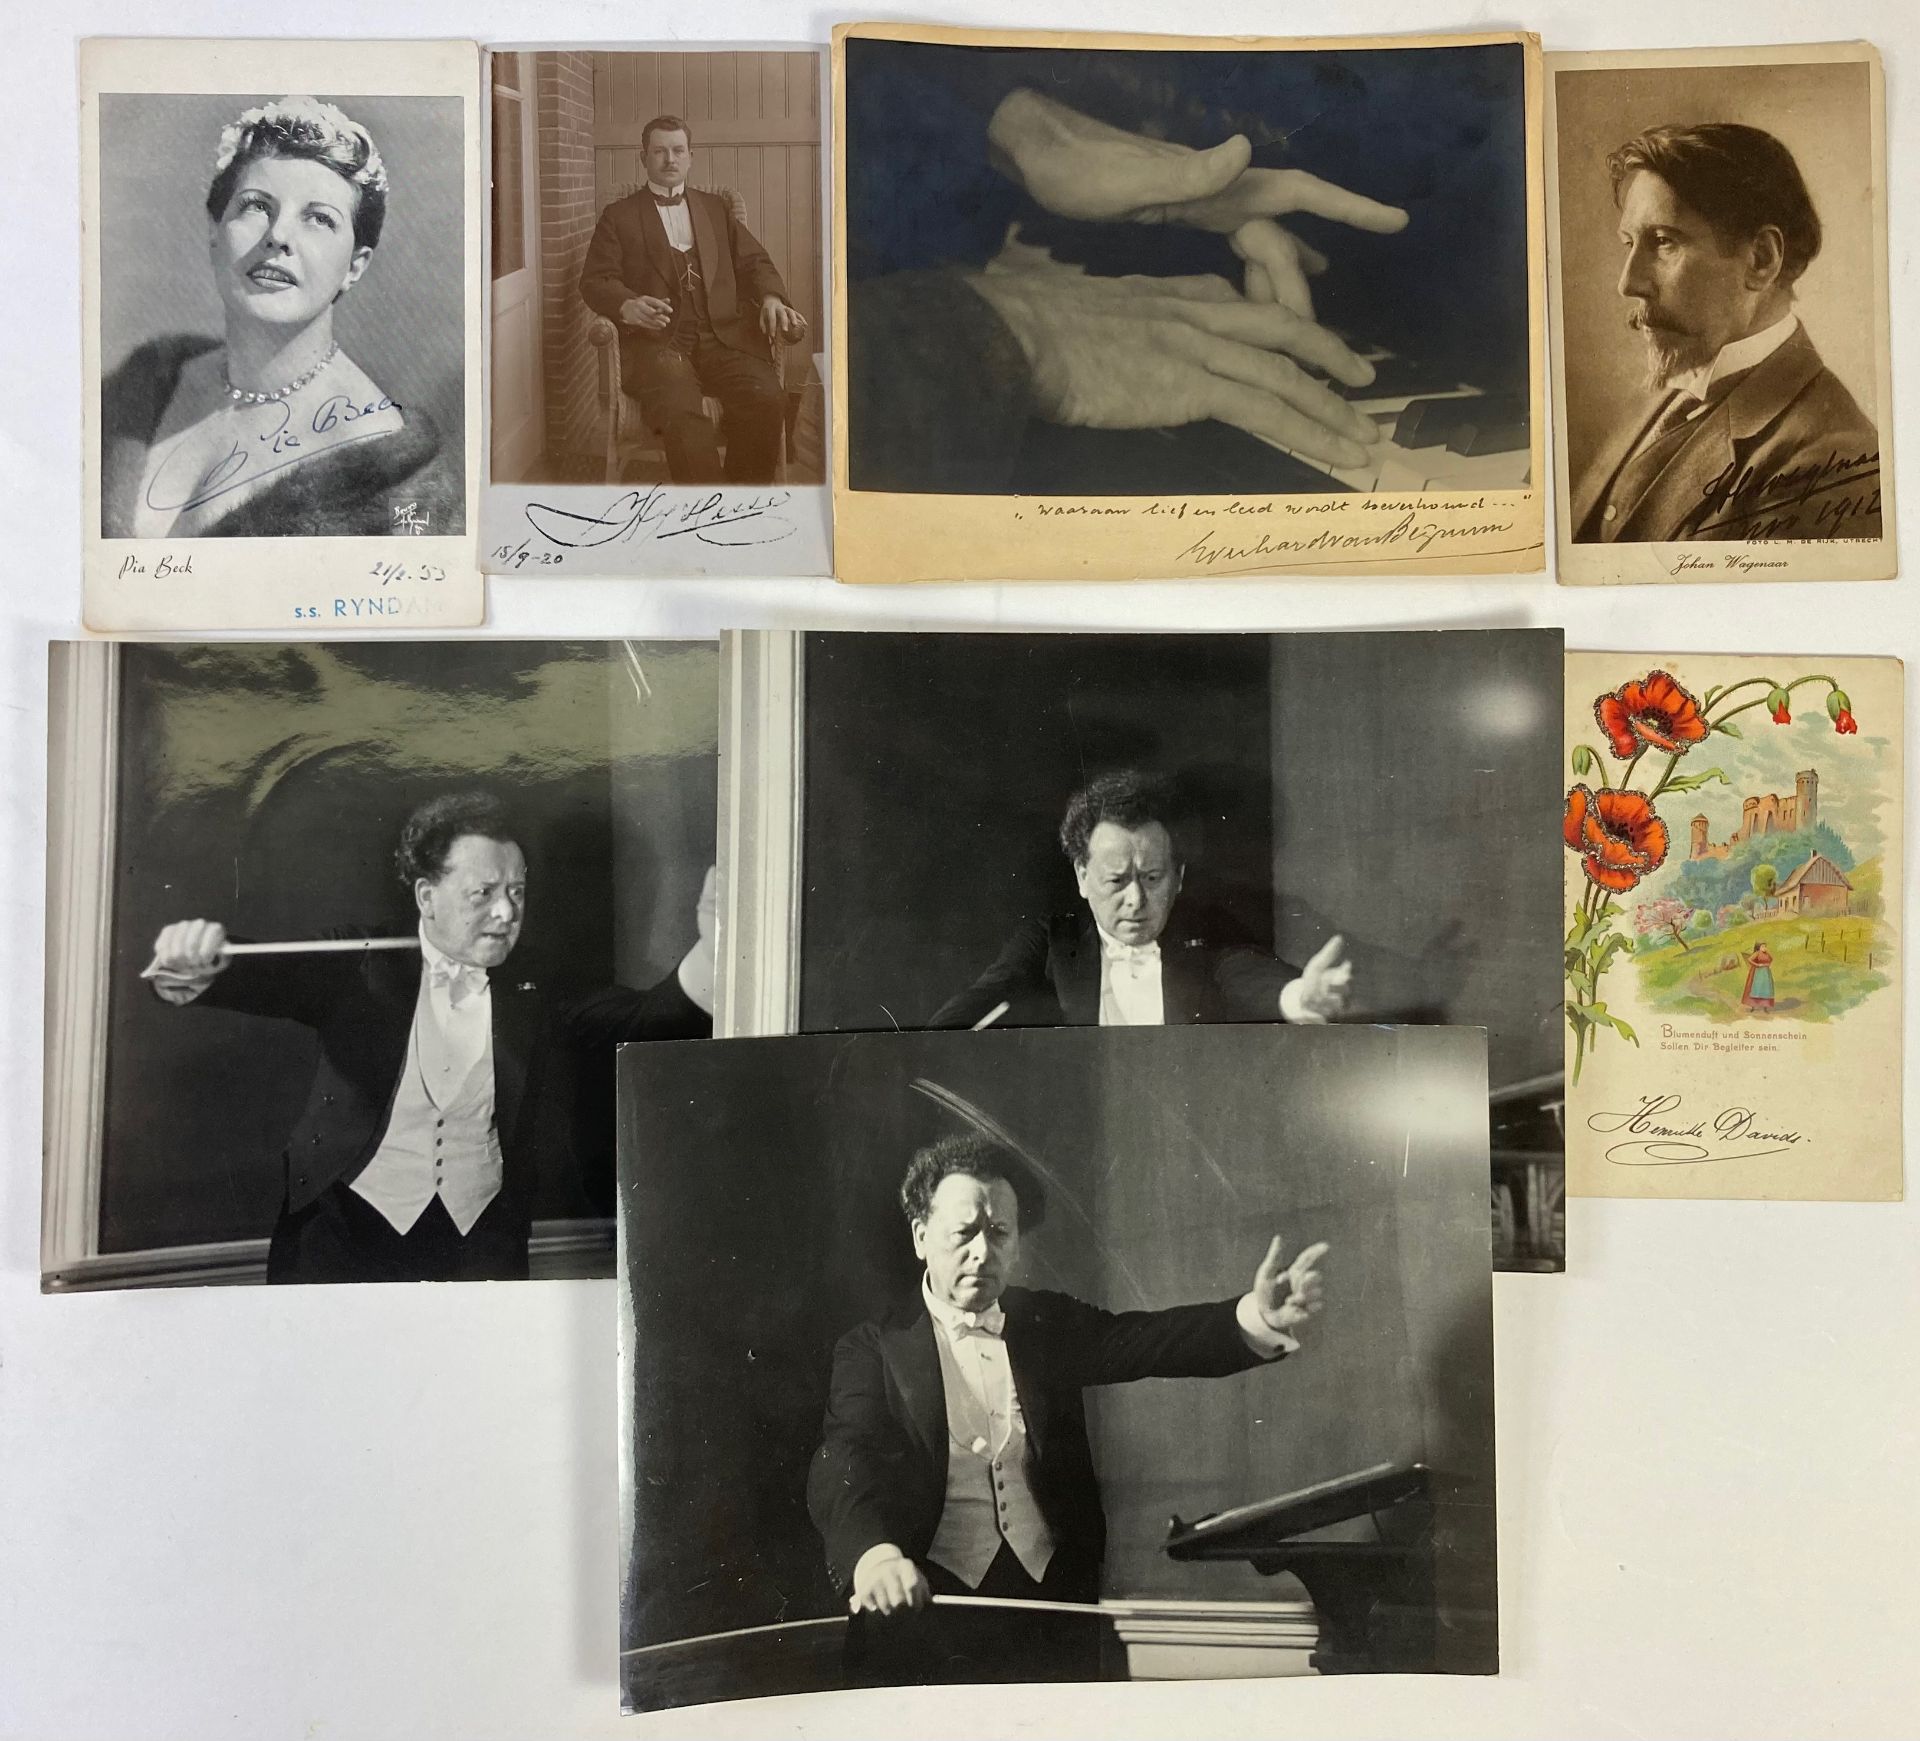 BEIJNUM, Everard v. (1894-1957), pianist. B&B photograph of v. B.'s